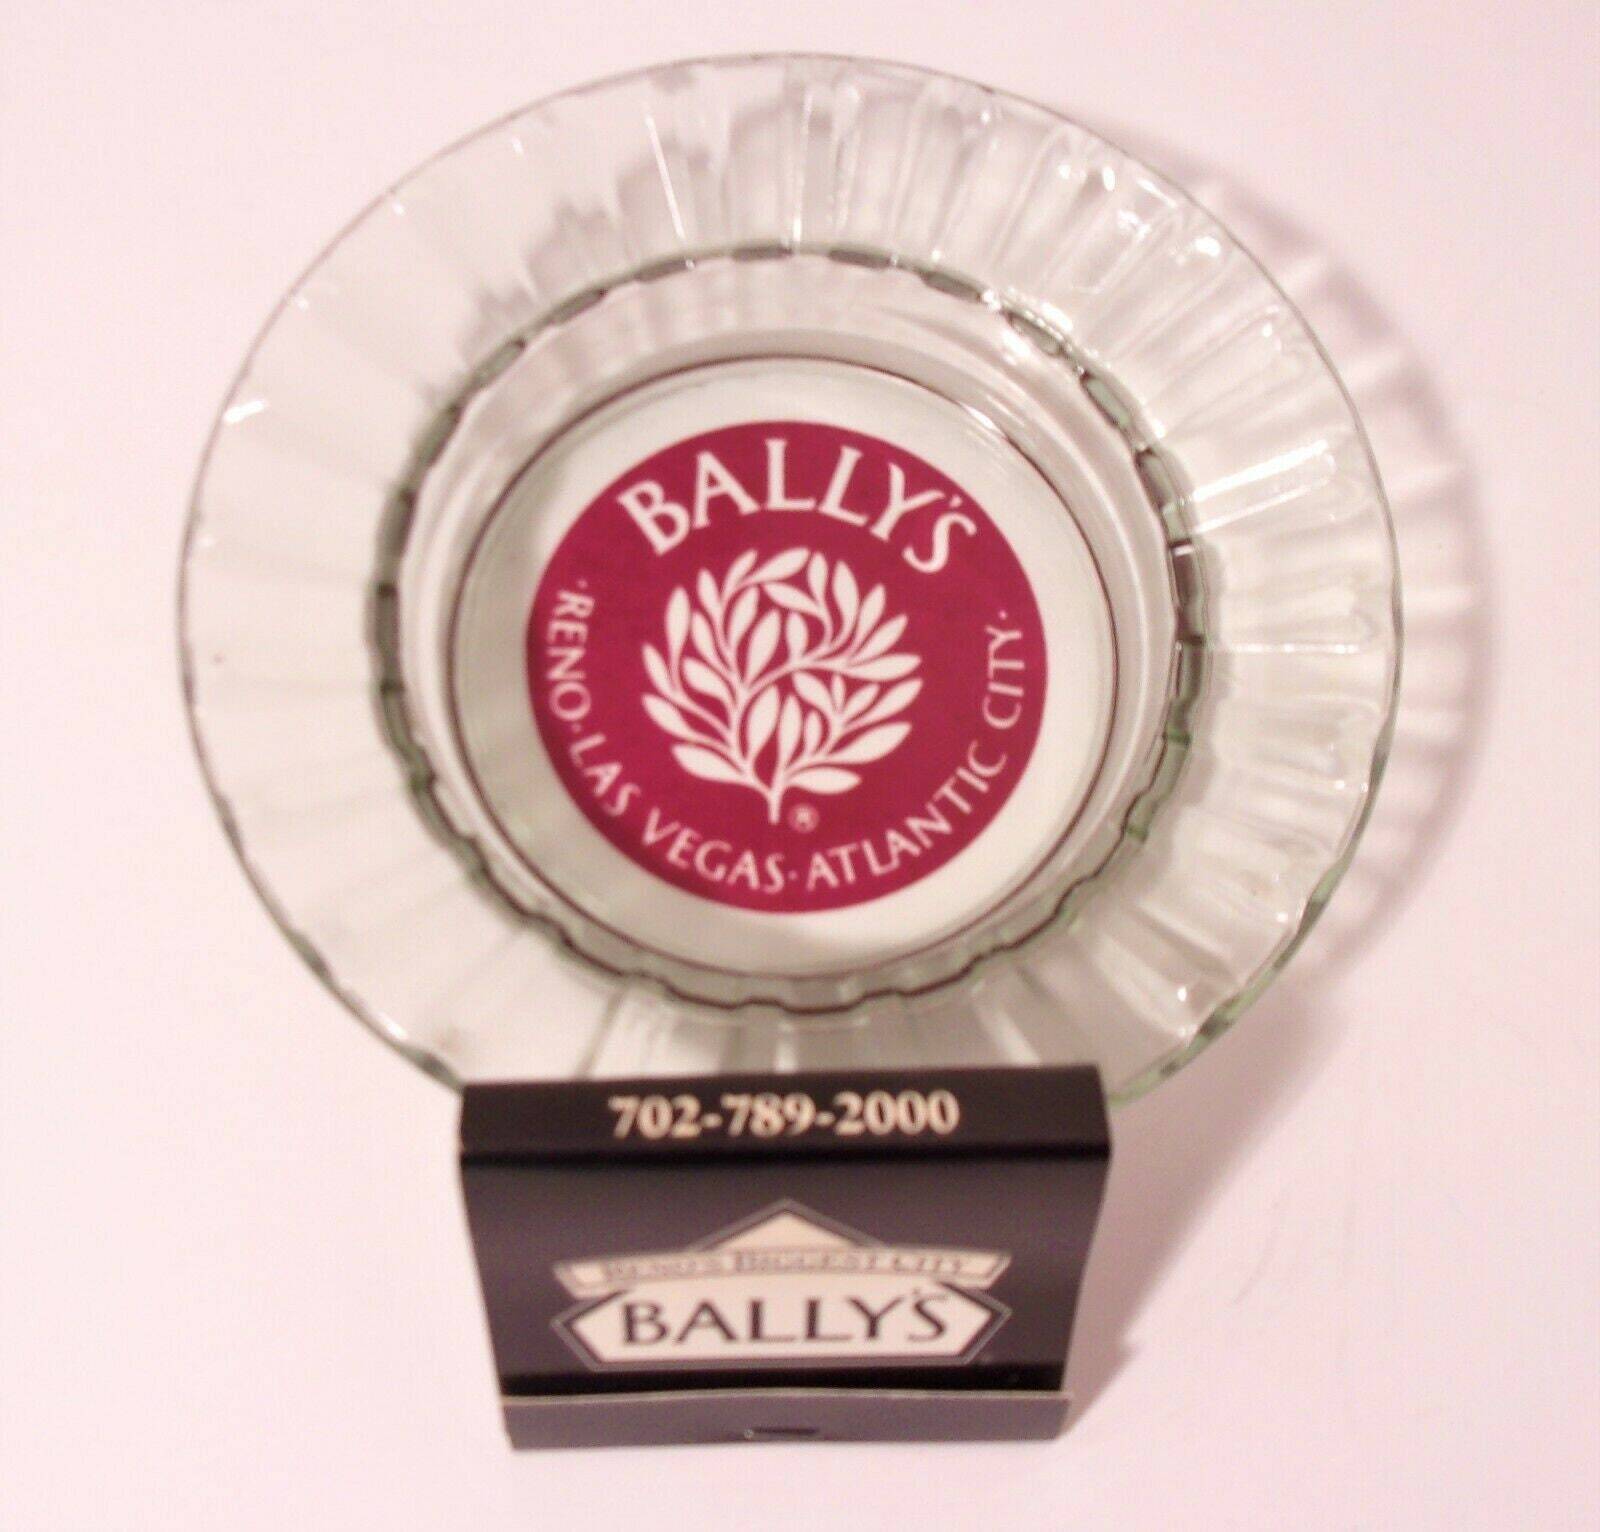 Vintage bally's hotel casino advertising ashtray matchbook trinket ring dish l78